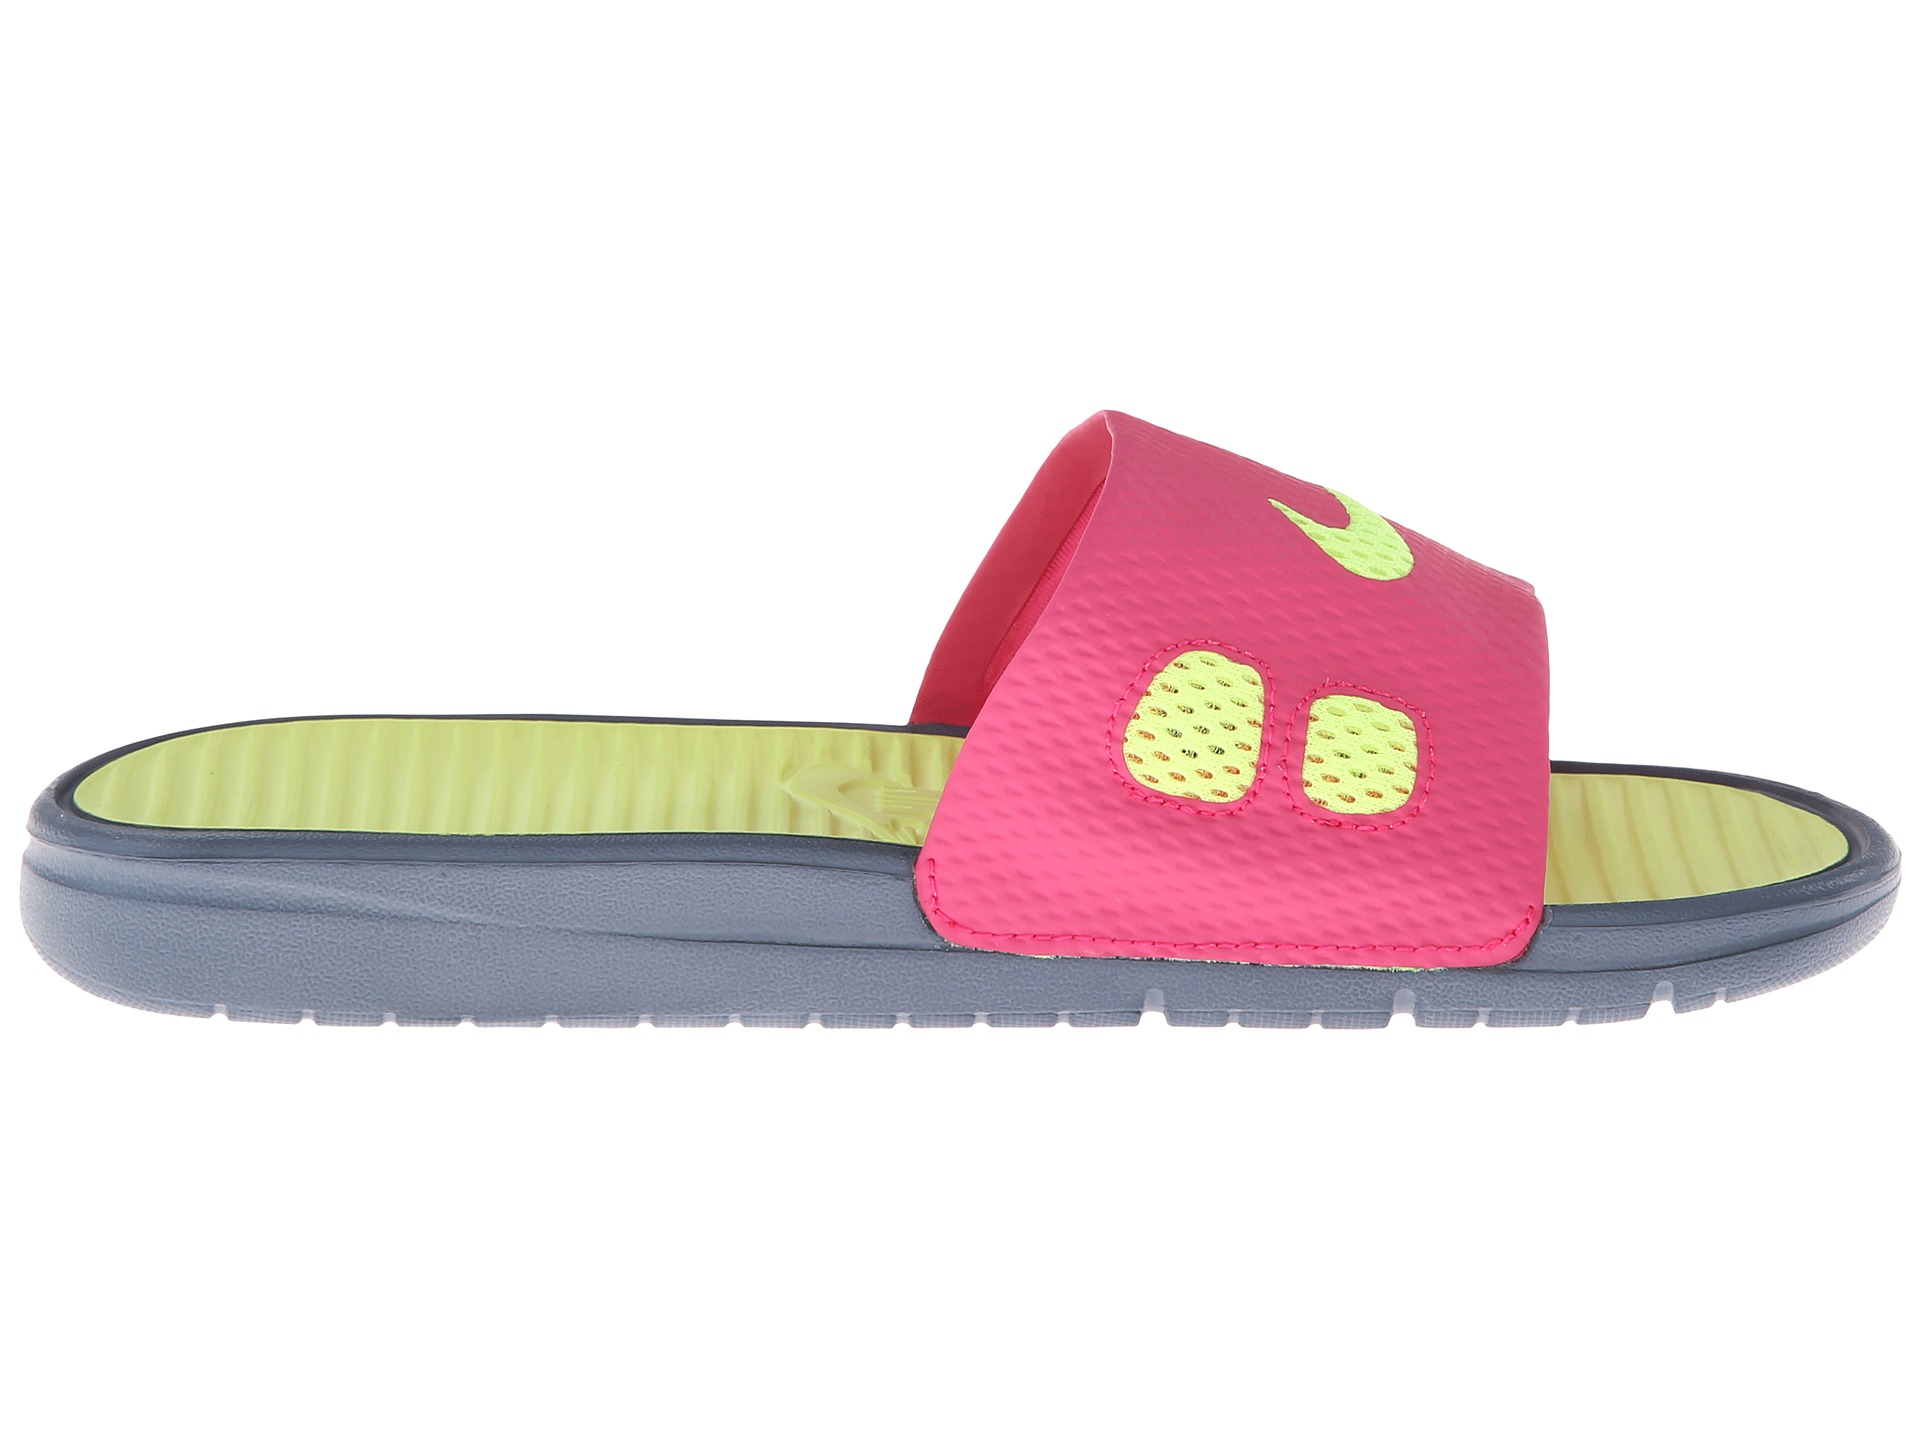 Nike Benassi Solarsoft Slide in Pink - Lyst